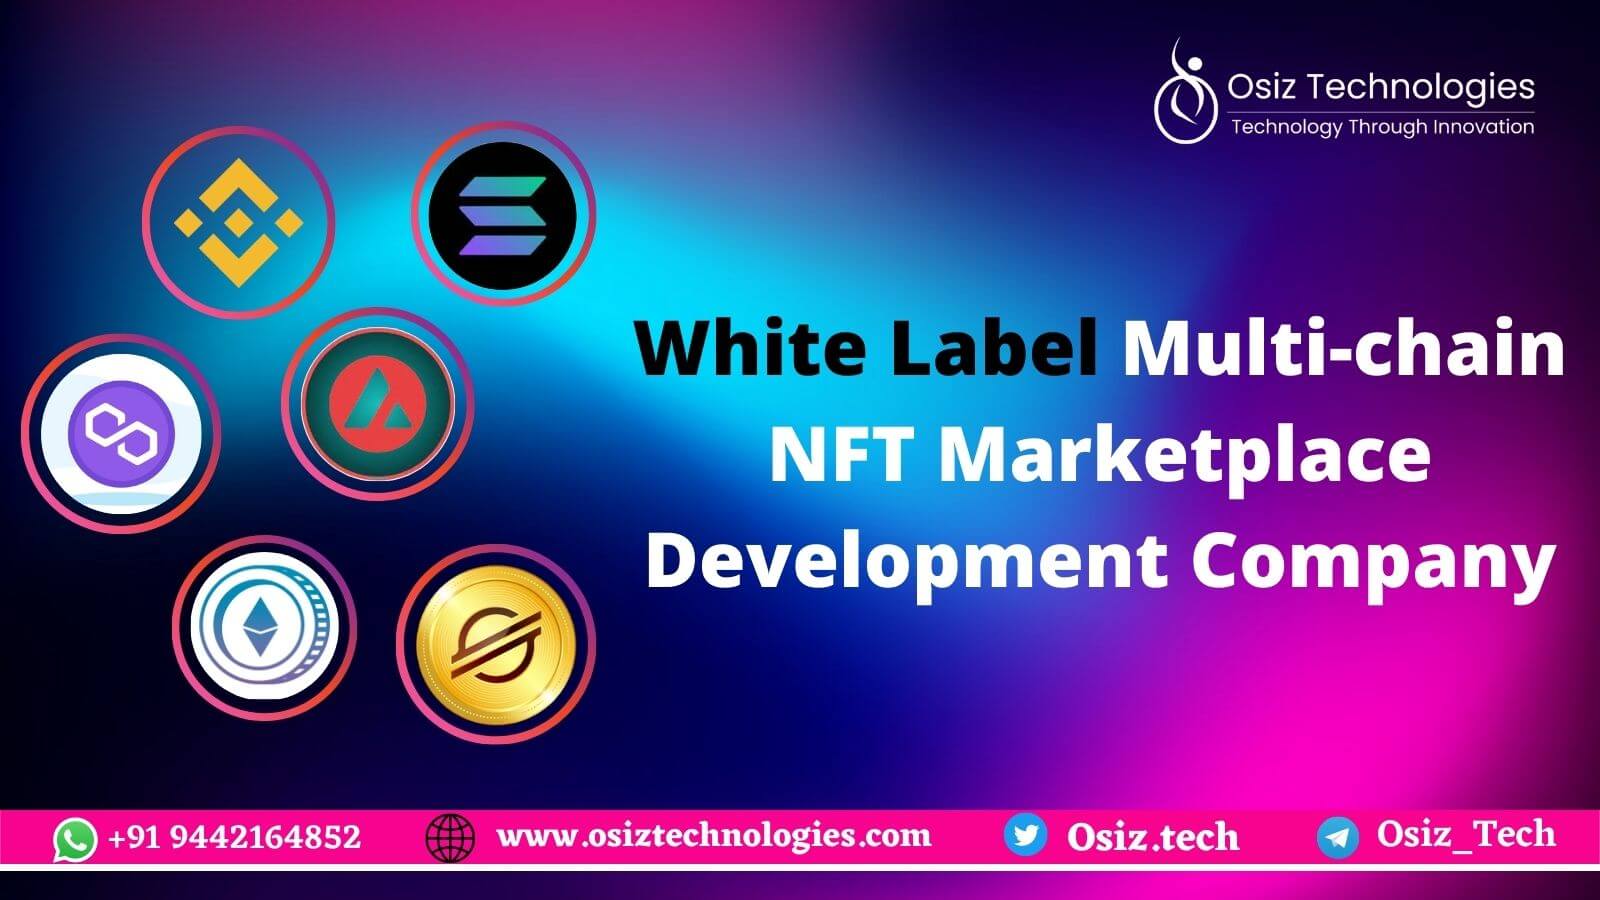 Multi-chain NFT Marketplace Development Company